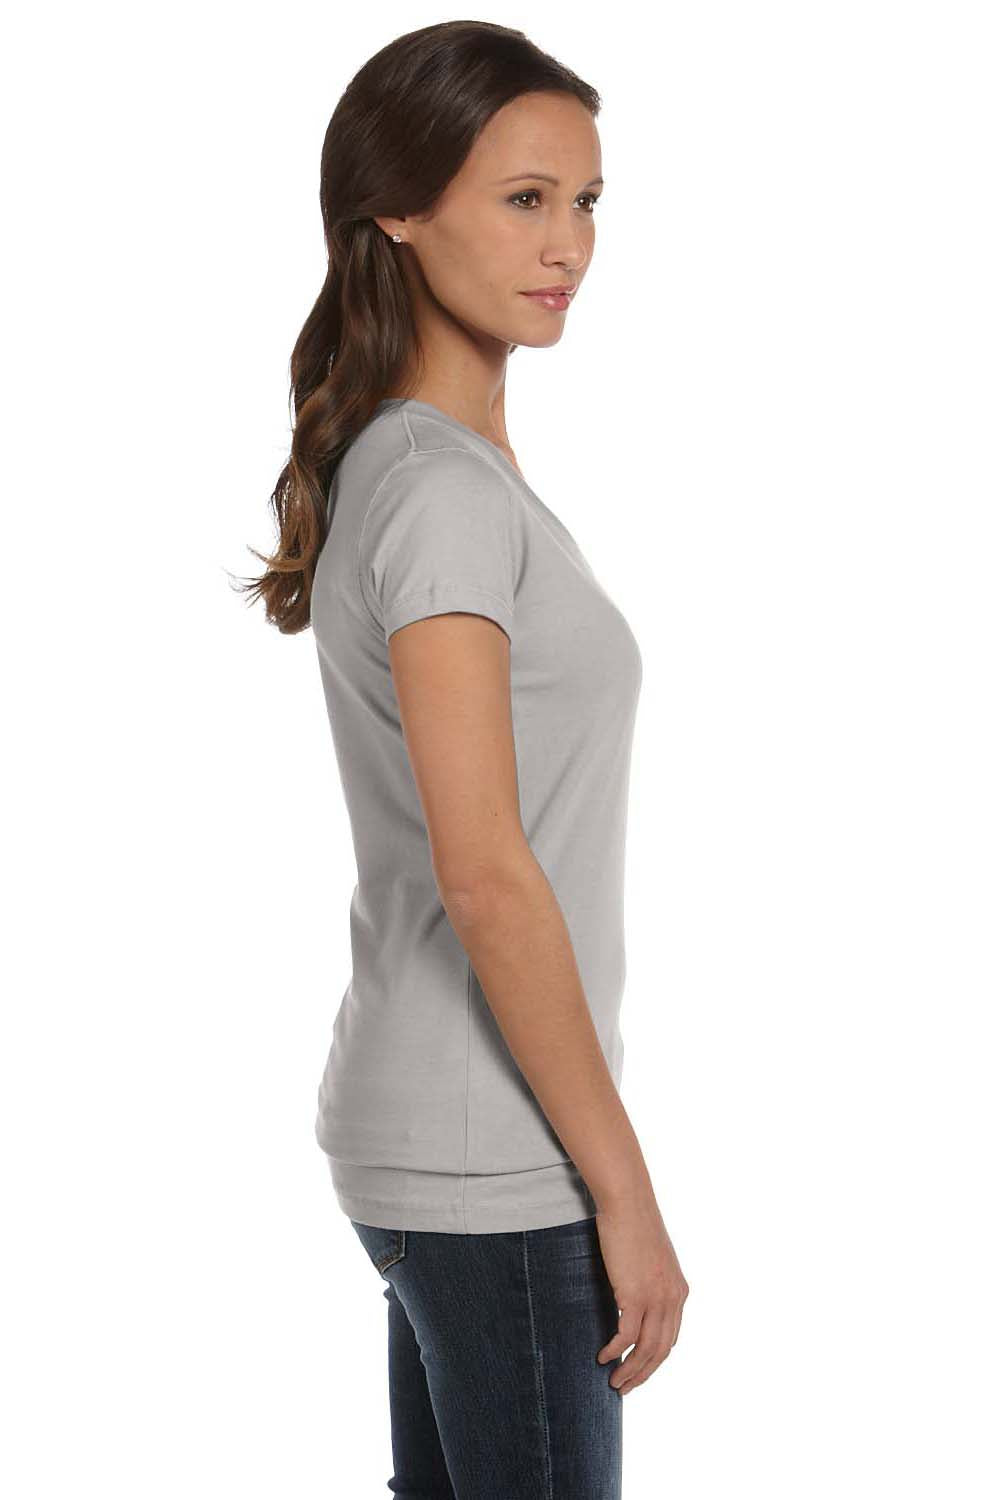 Bella + Canvas B6005/6005 Womens Jersey Short Sleeve V-Neck T-Shirt Heather Grey Model Side